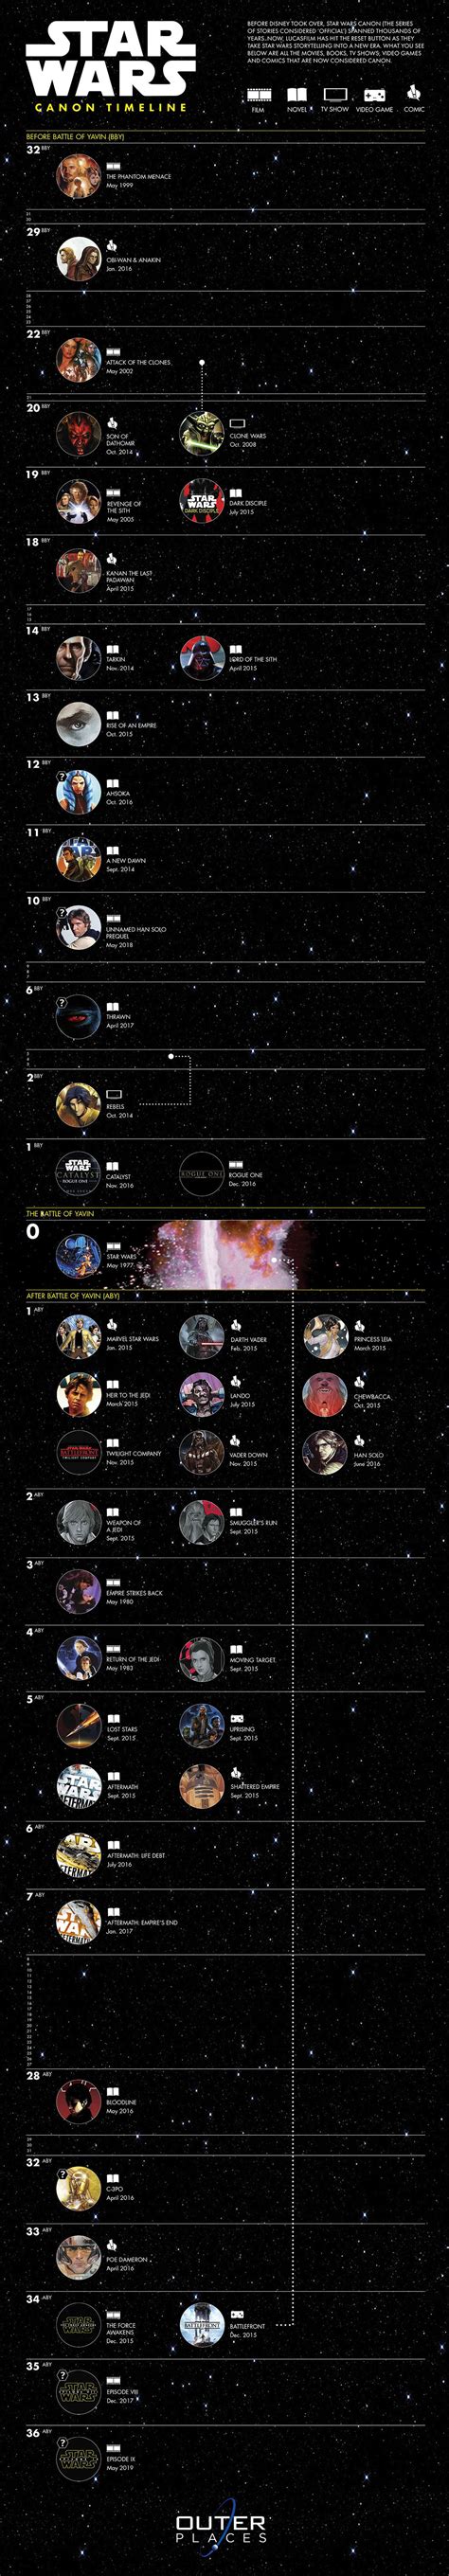 Star Wars Movie Timeline Lasopawired